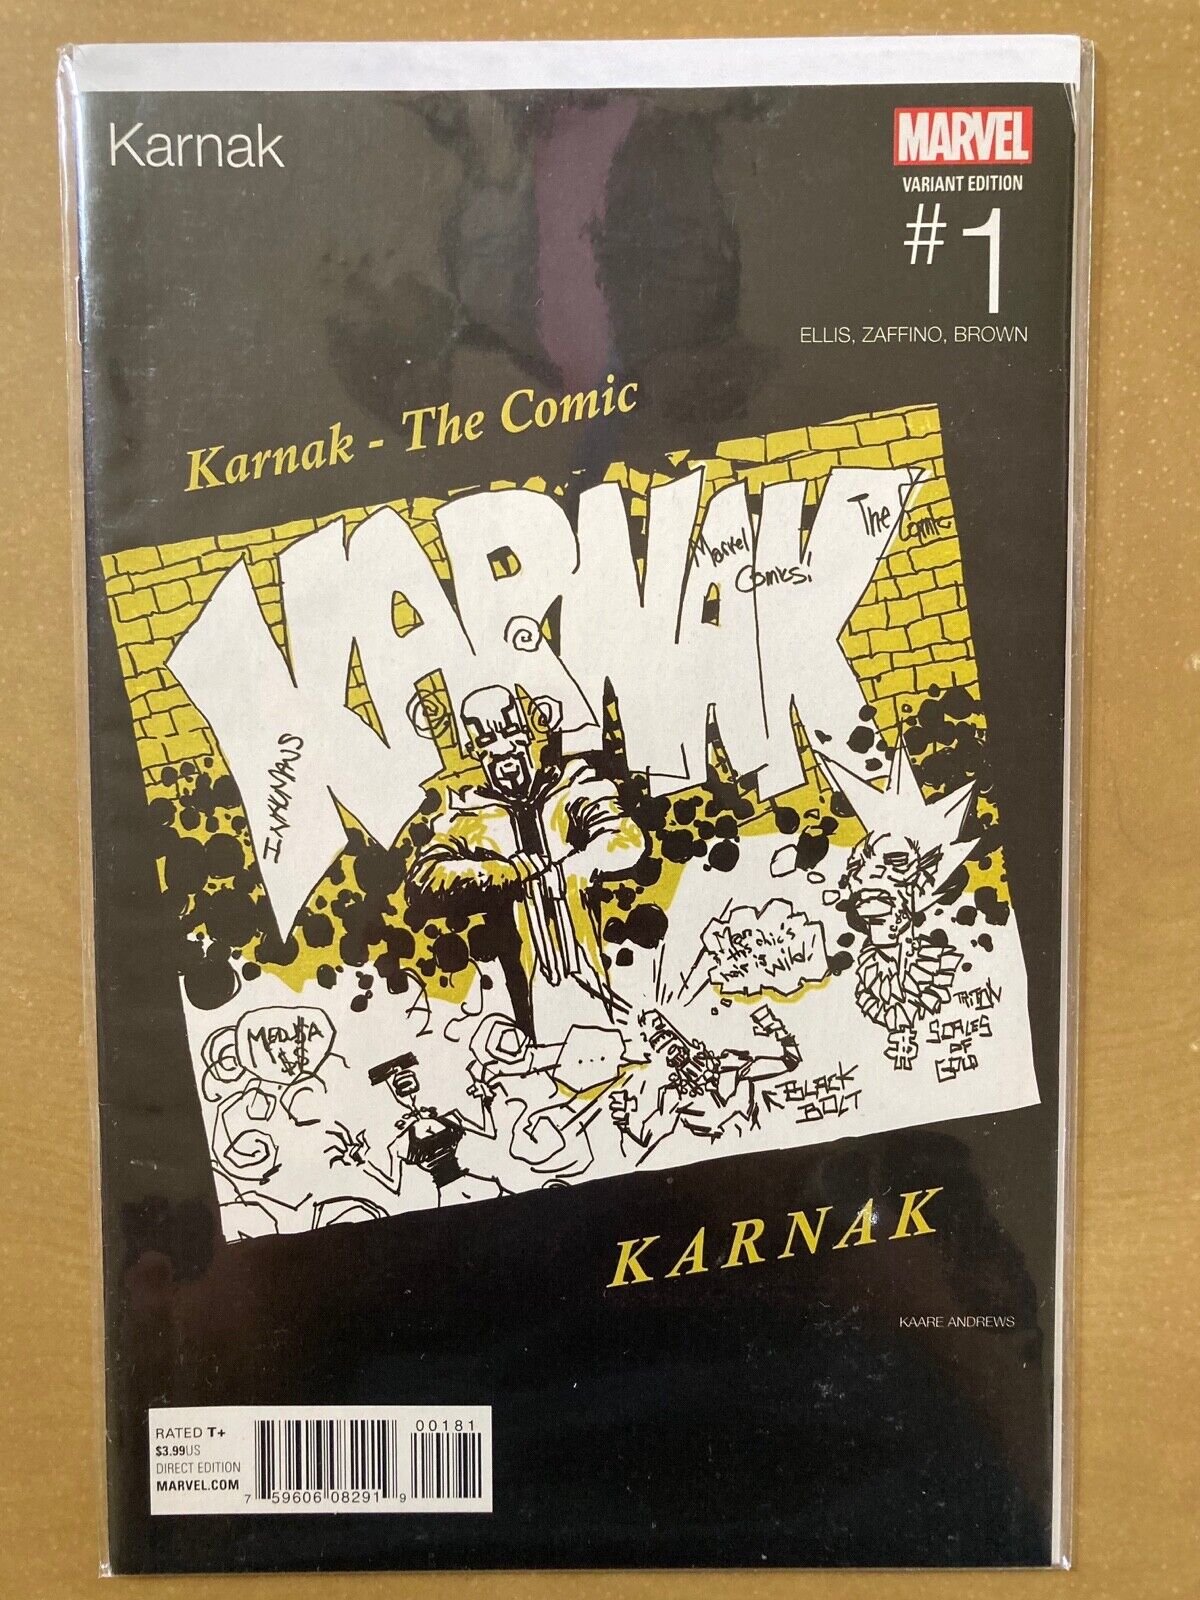 Karnak #1 Marvel Hip-Hop Variant - Very Fine+/Near Mint (VF+/NM) Condition